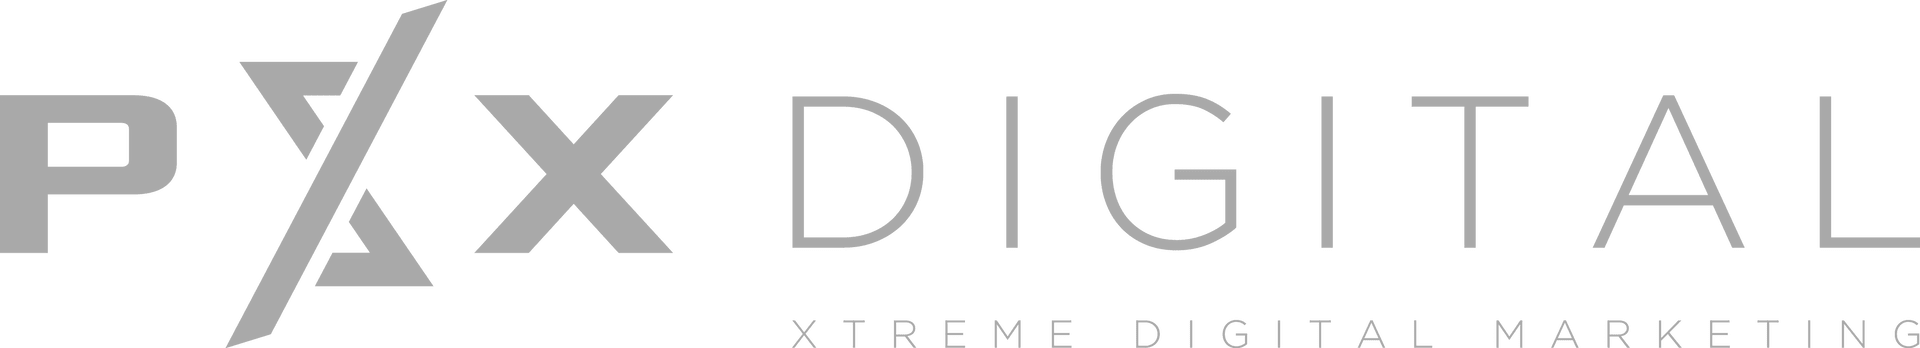 PSX Digital - Extreme Digital Marketing